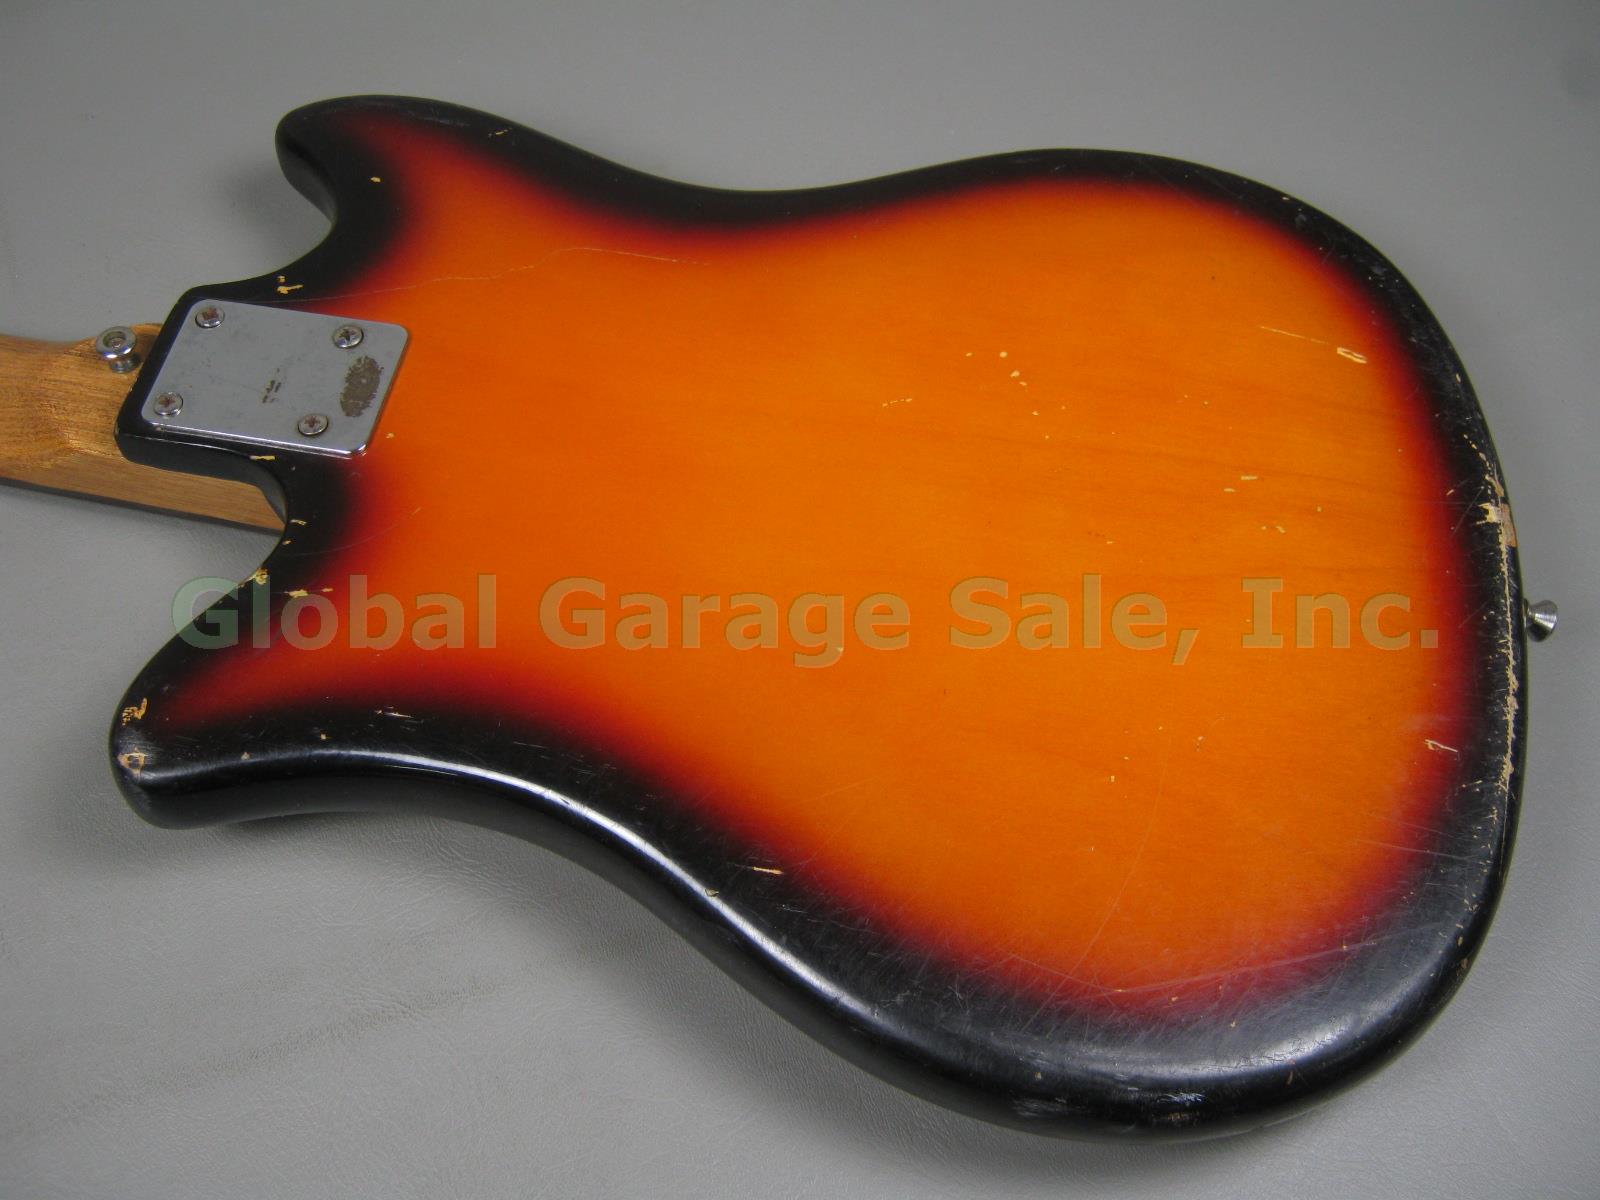 Vtg Harmony Electric Guitar MIJ? Japan? Lawsuit Era? As-Is For Parts Or Repair 6